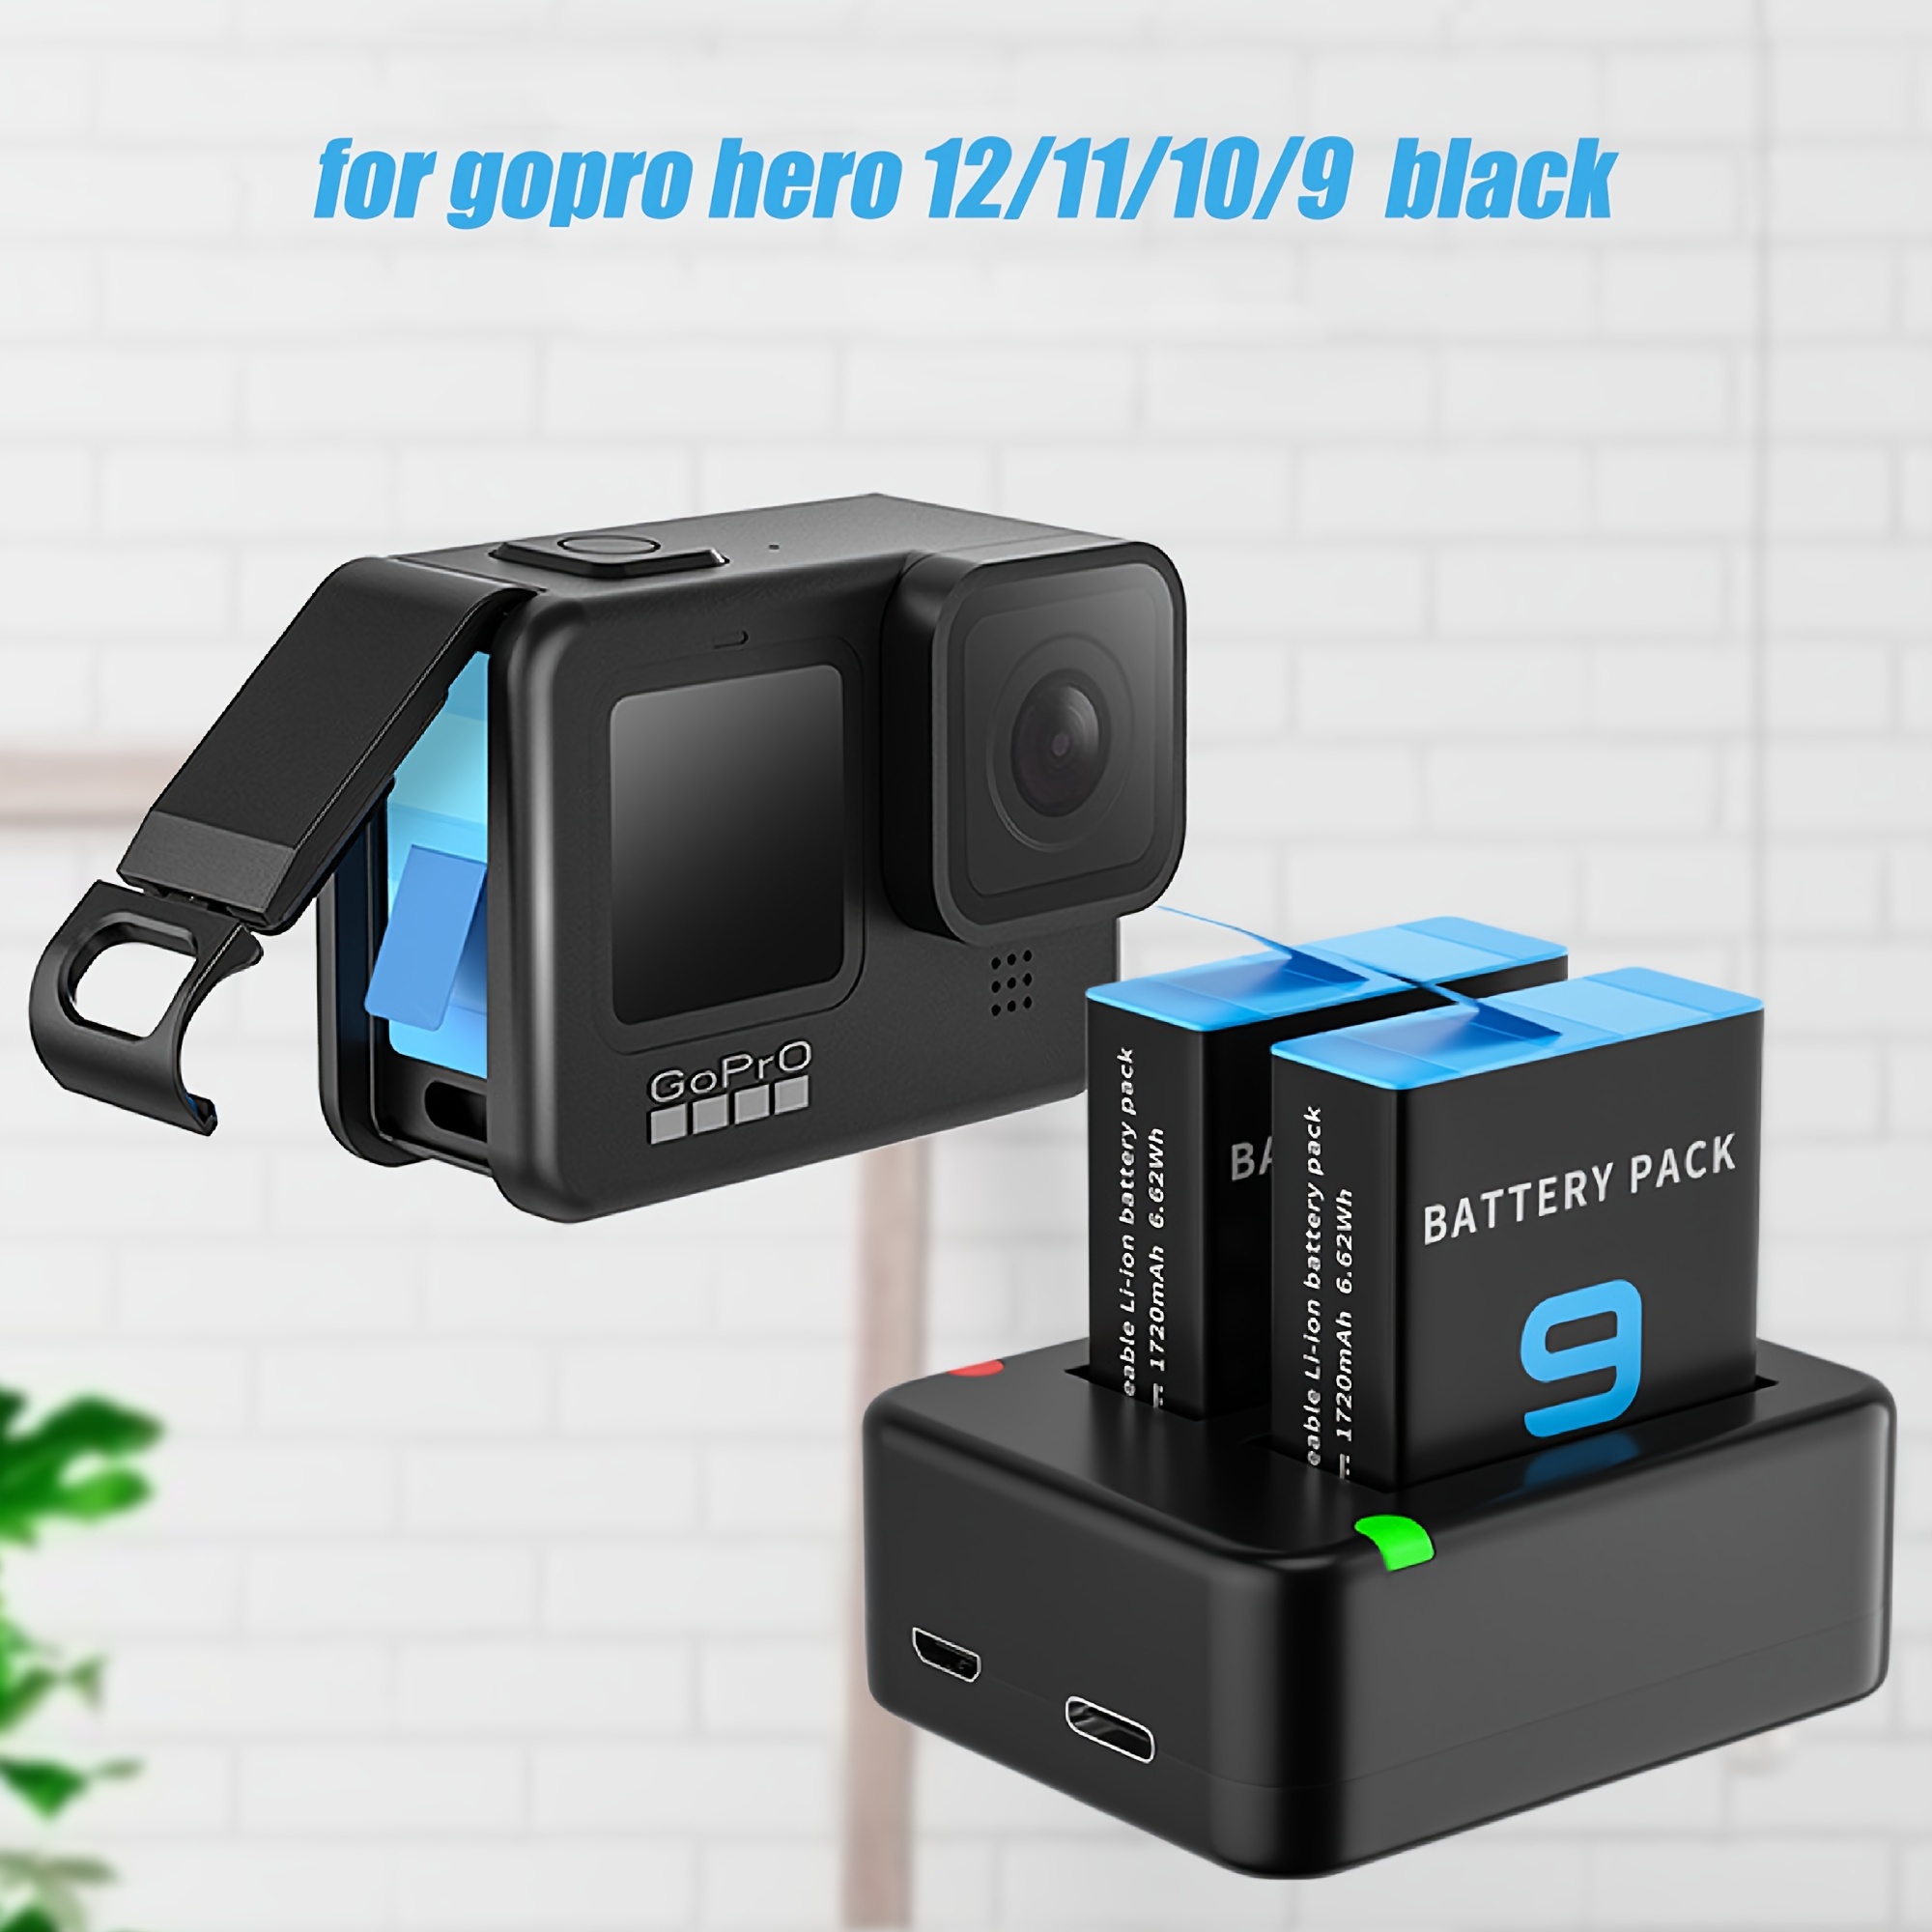 GoPro Chargeur Batteries Dual + Enduro (HERO 9/10/11/12)